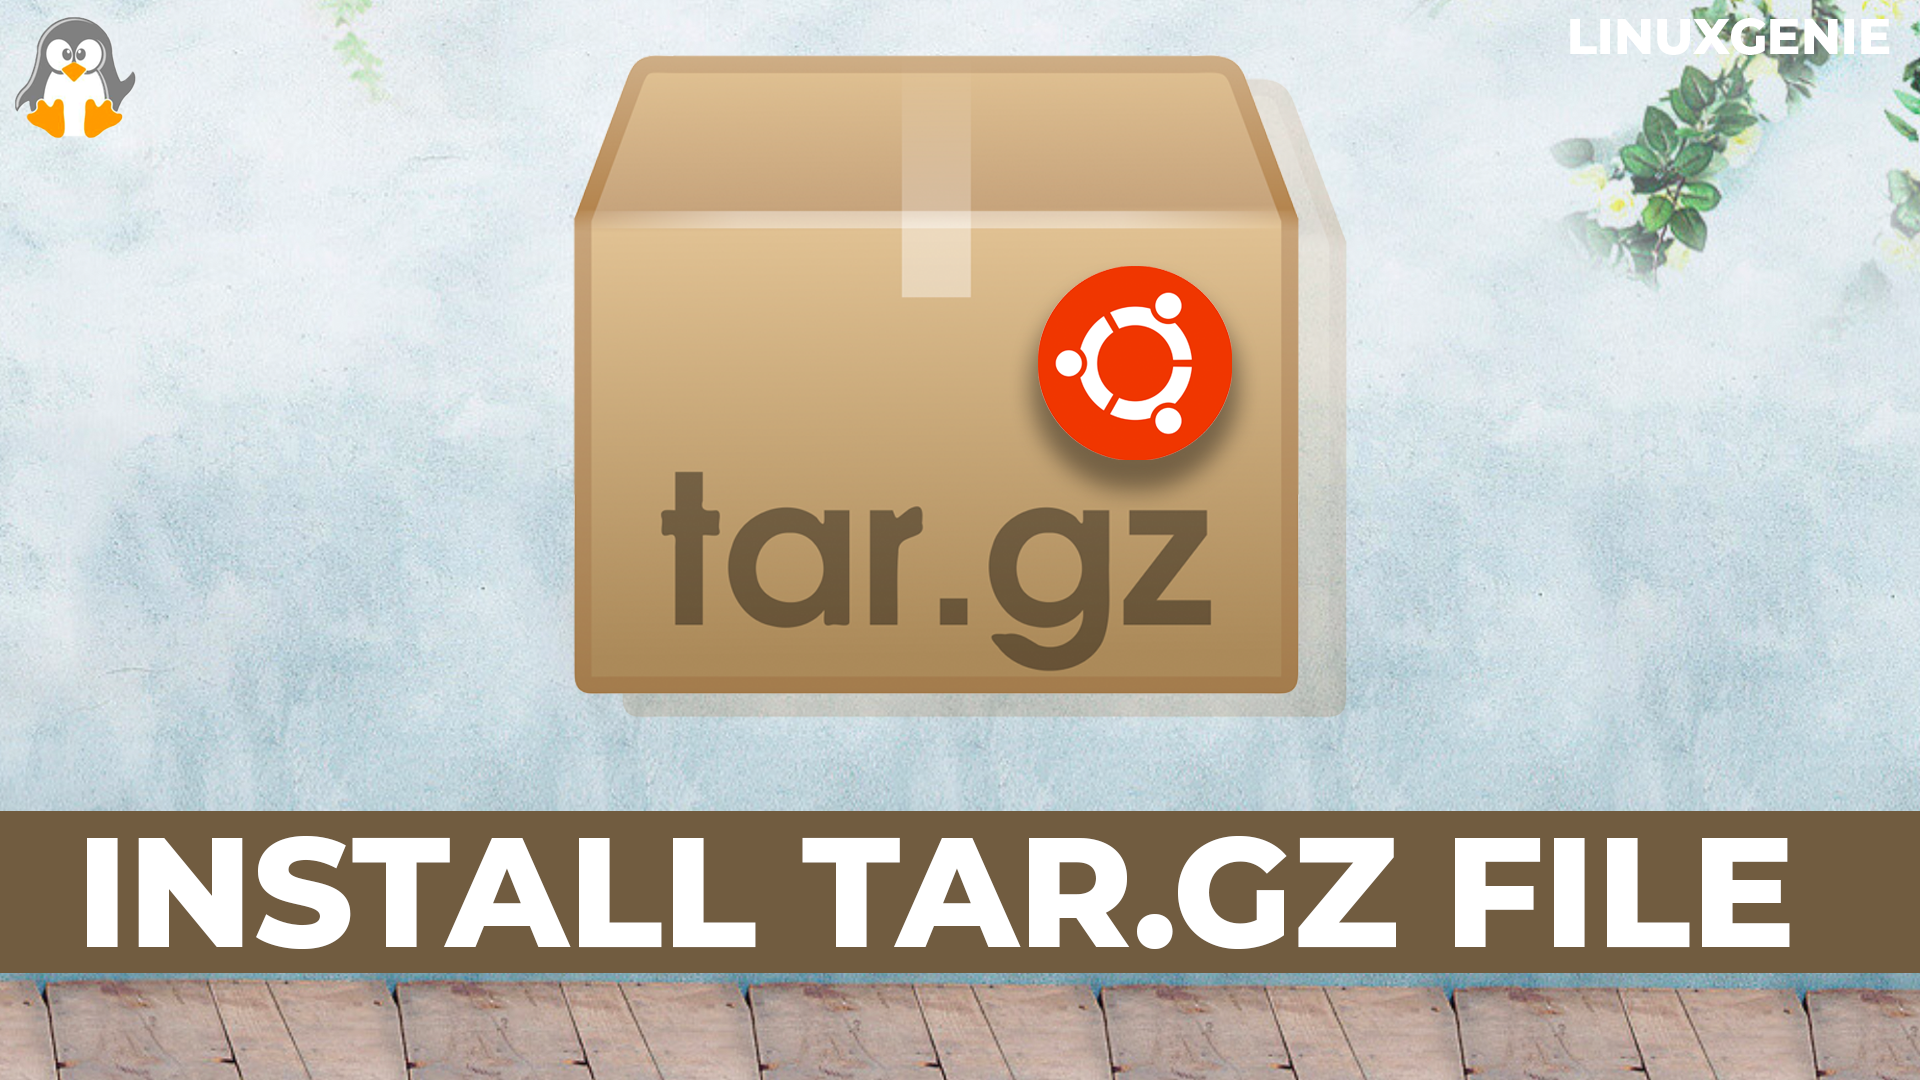 How to Install tar.gz File on Ubuntu/Linux?